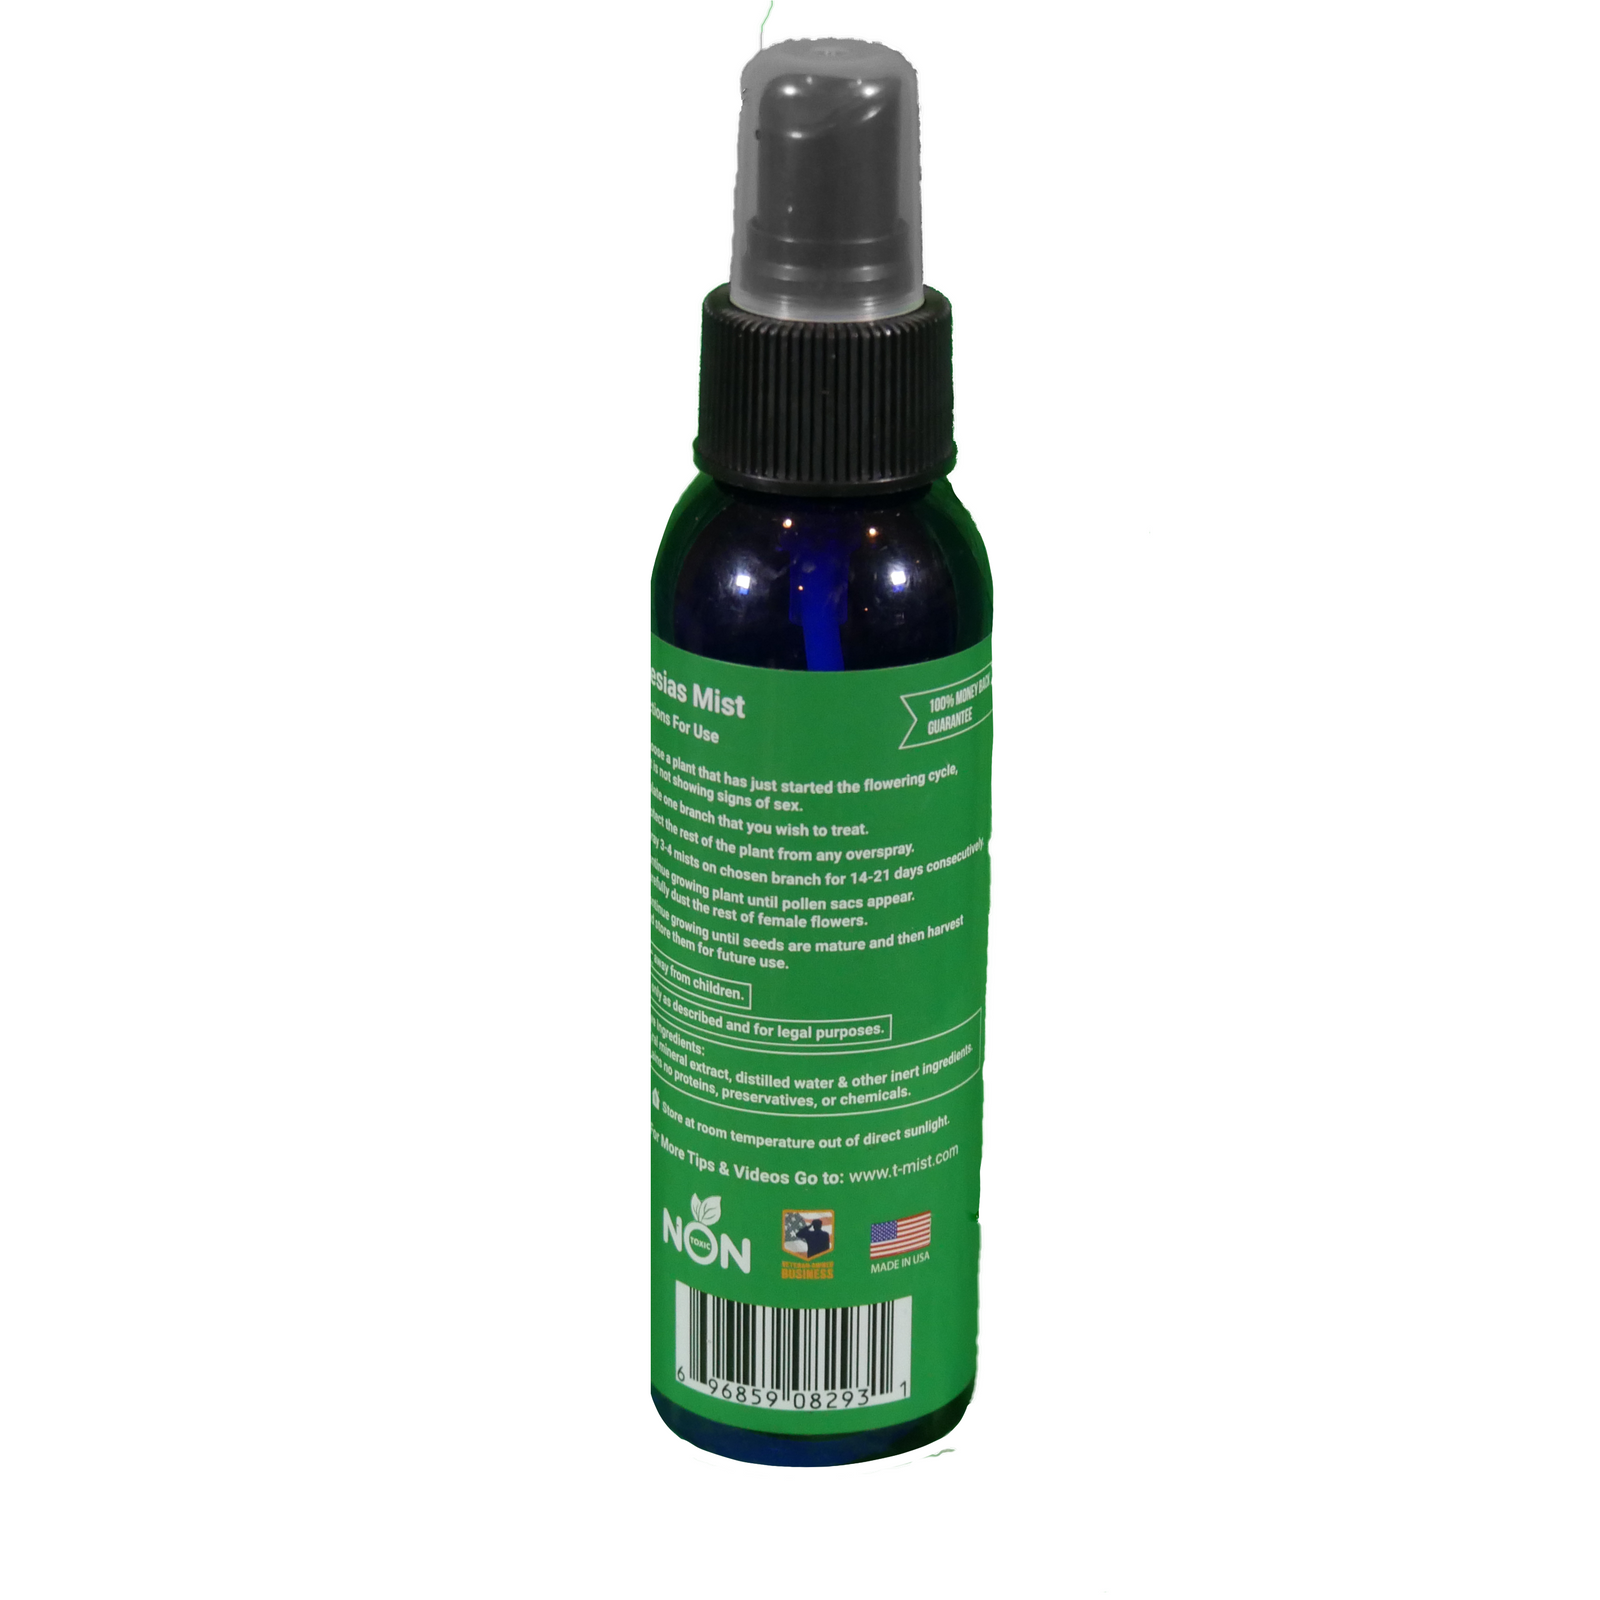 Tiresias Mist Seed Feminizer Bottle (1 oz or 4 oz) | Grow Supply Shop